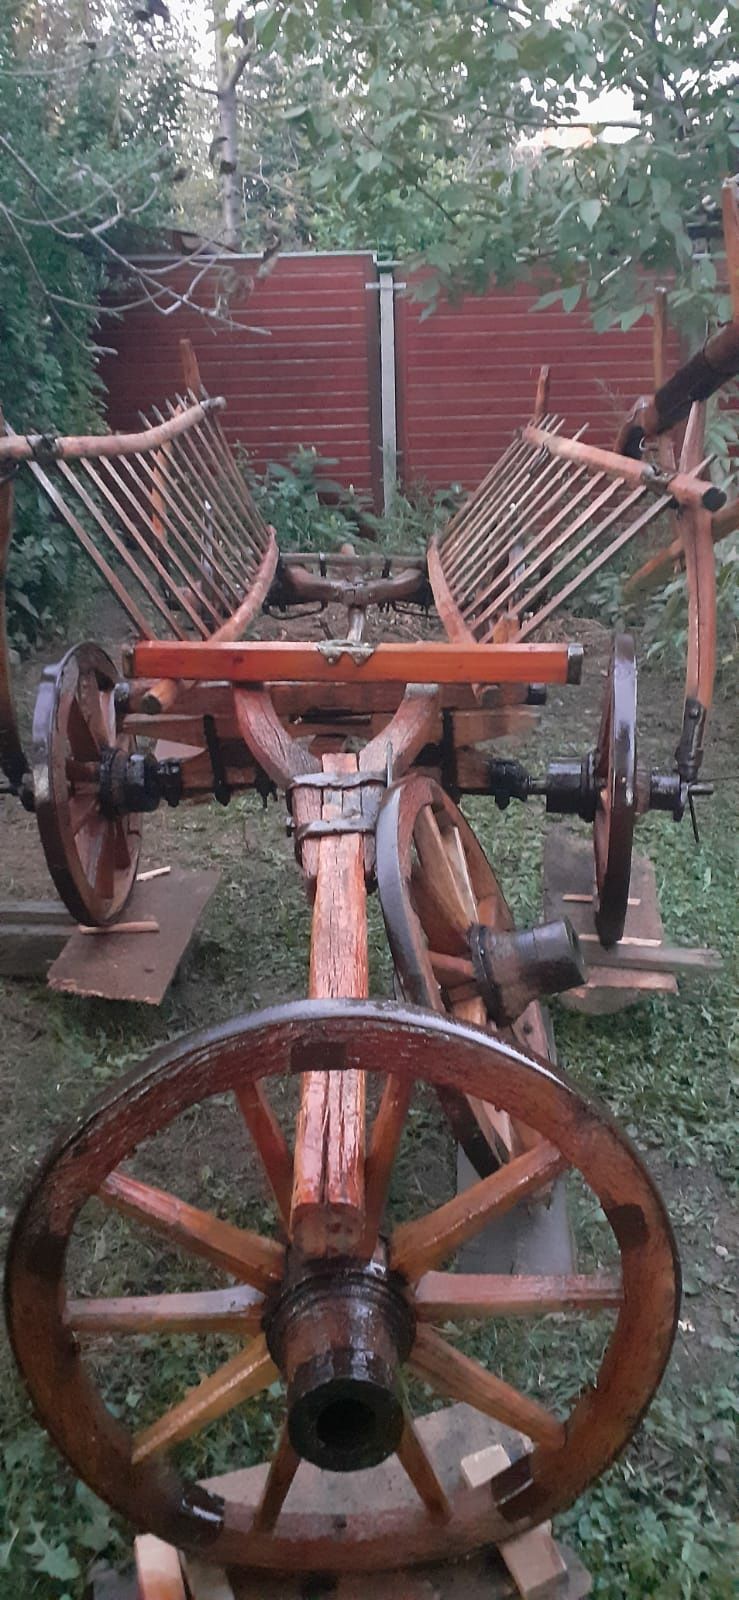 Car vechi de lemn, recondiționat